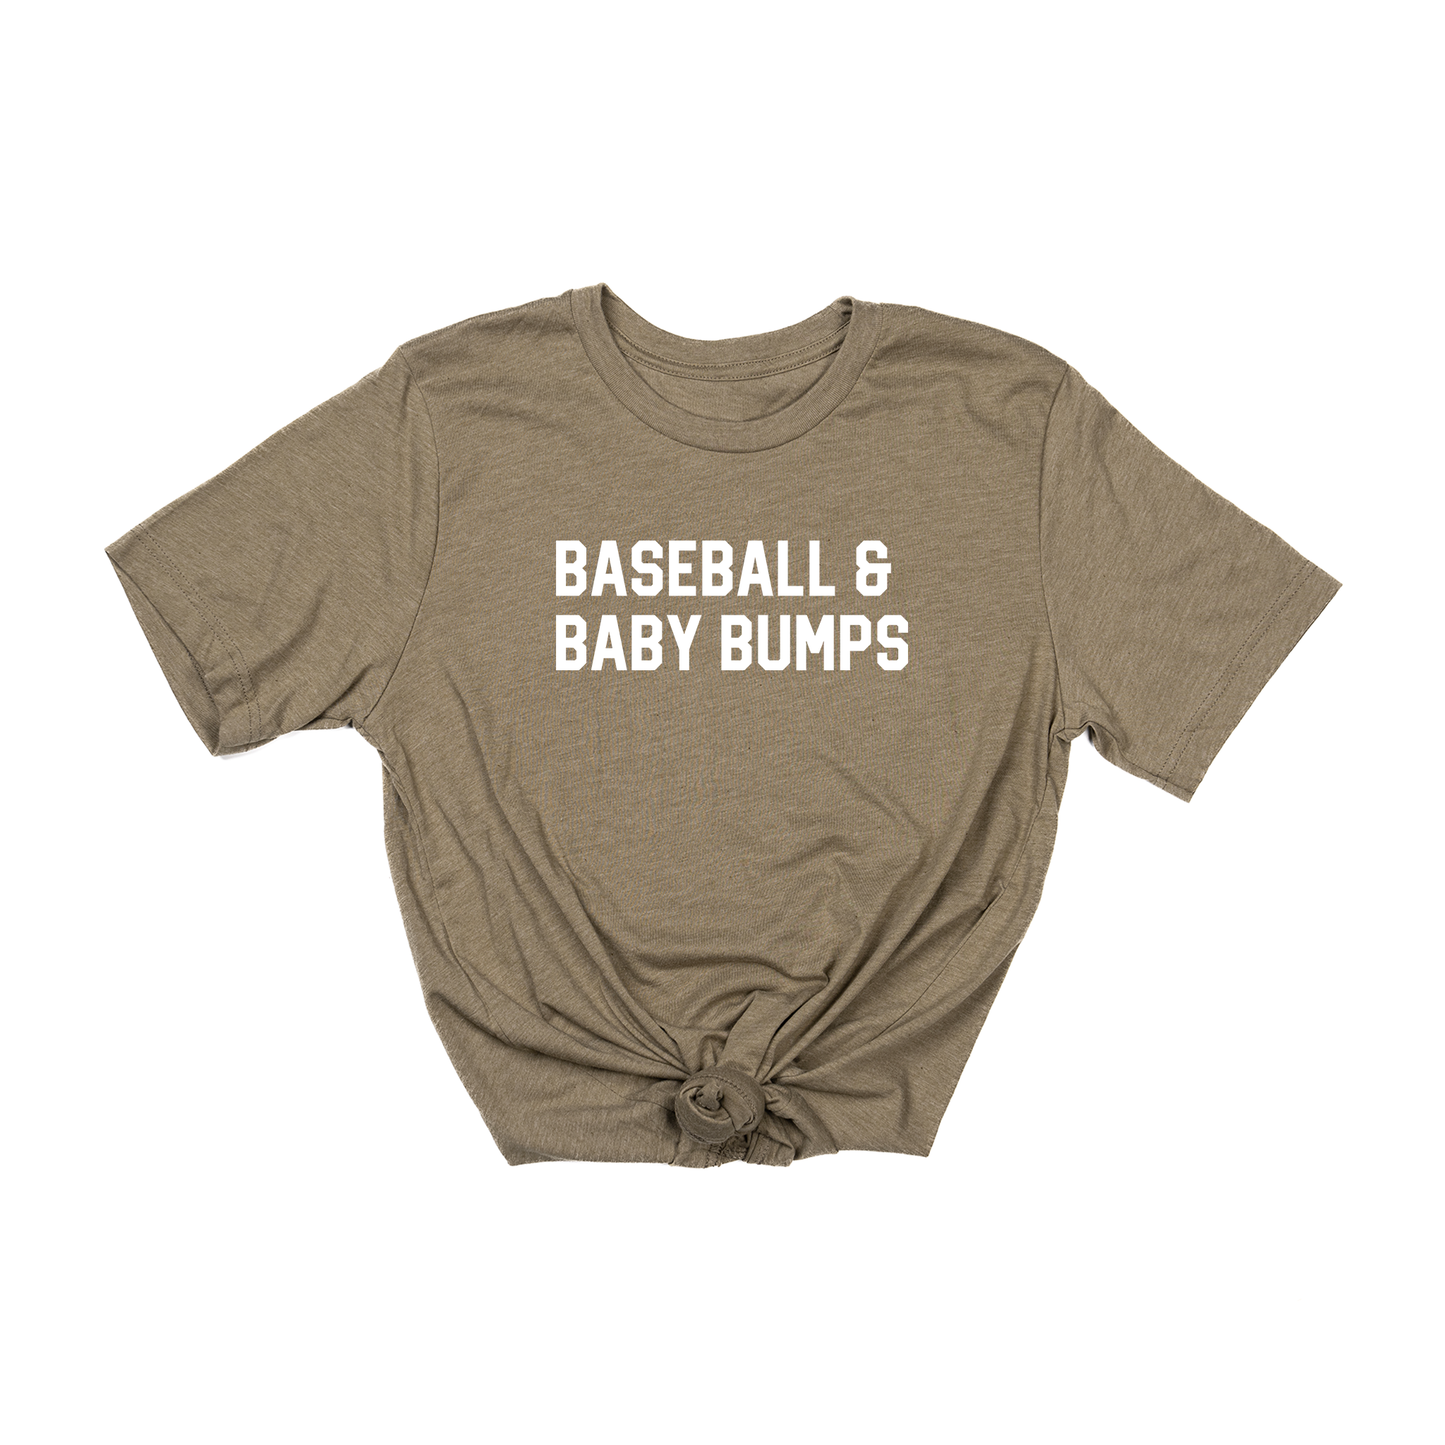 Baseball & Baby Bumps (White) - Tee (Olive)